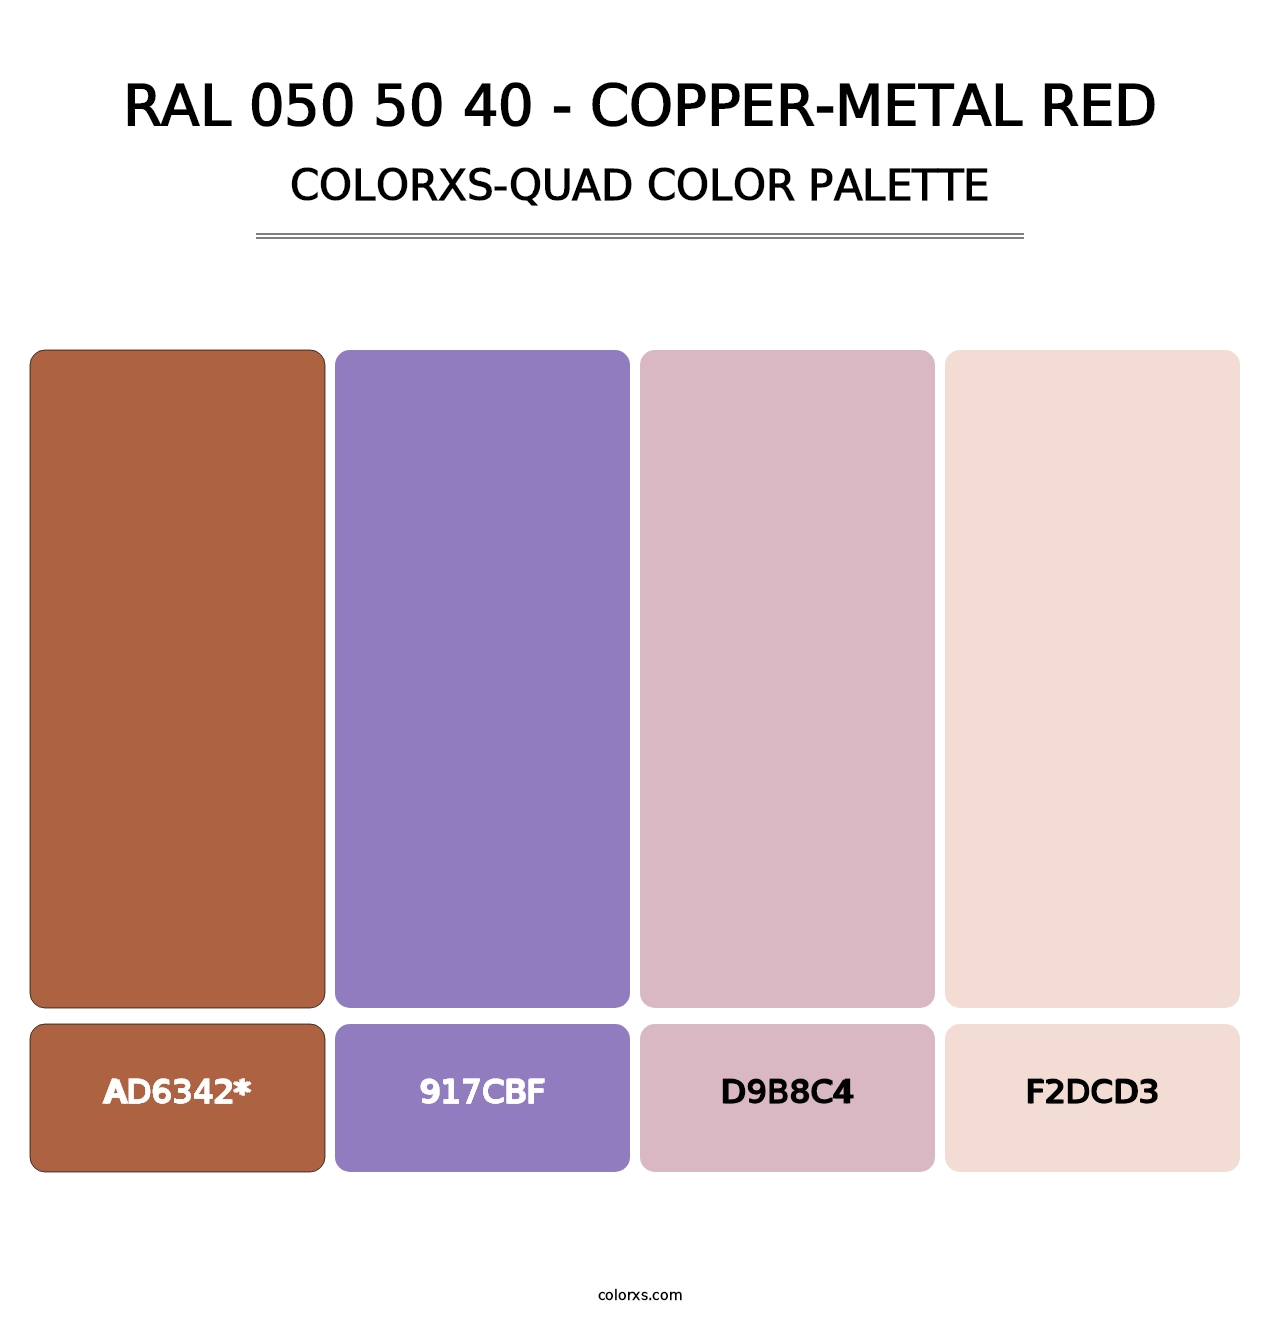 RAL 050 50 40 - Copper-Metal Red - Colorxs Quad Palette